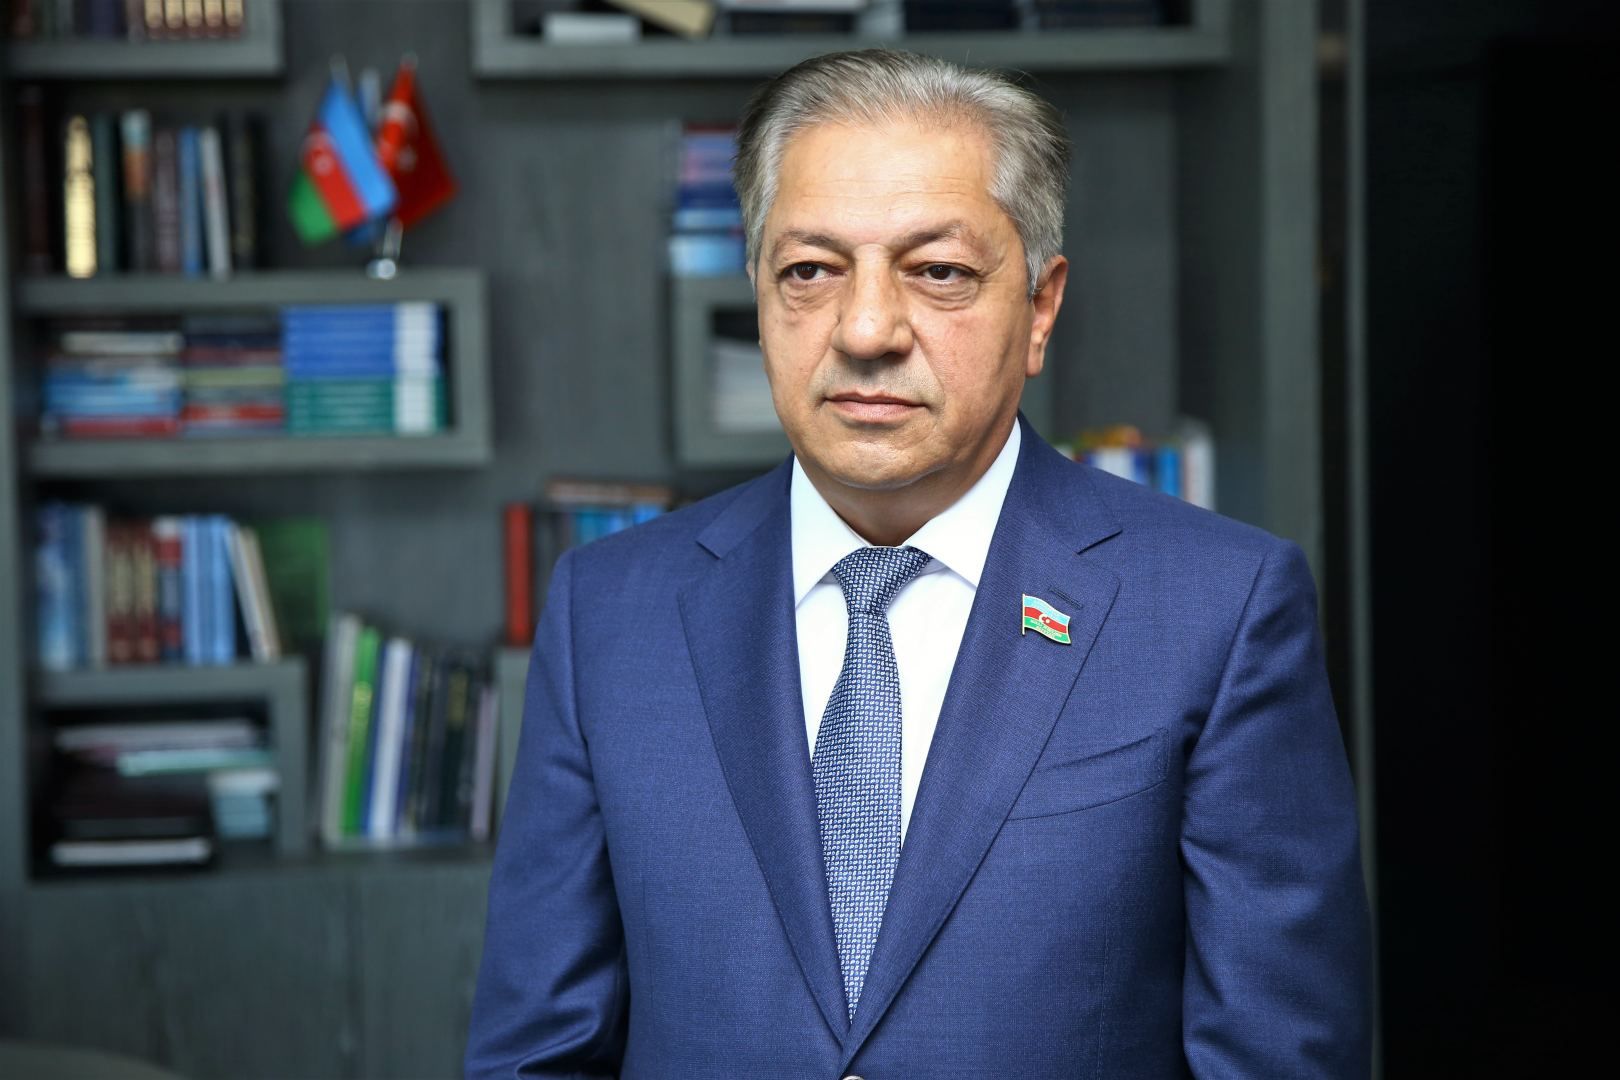 Merits of Member of National Assembly of Azerbaijan awarded